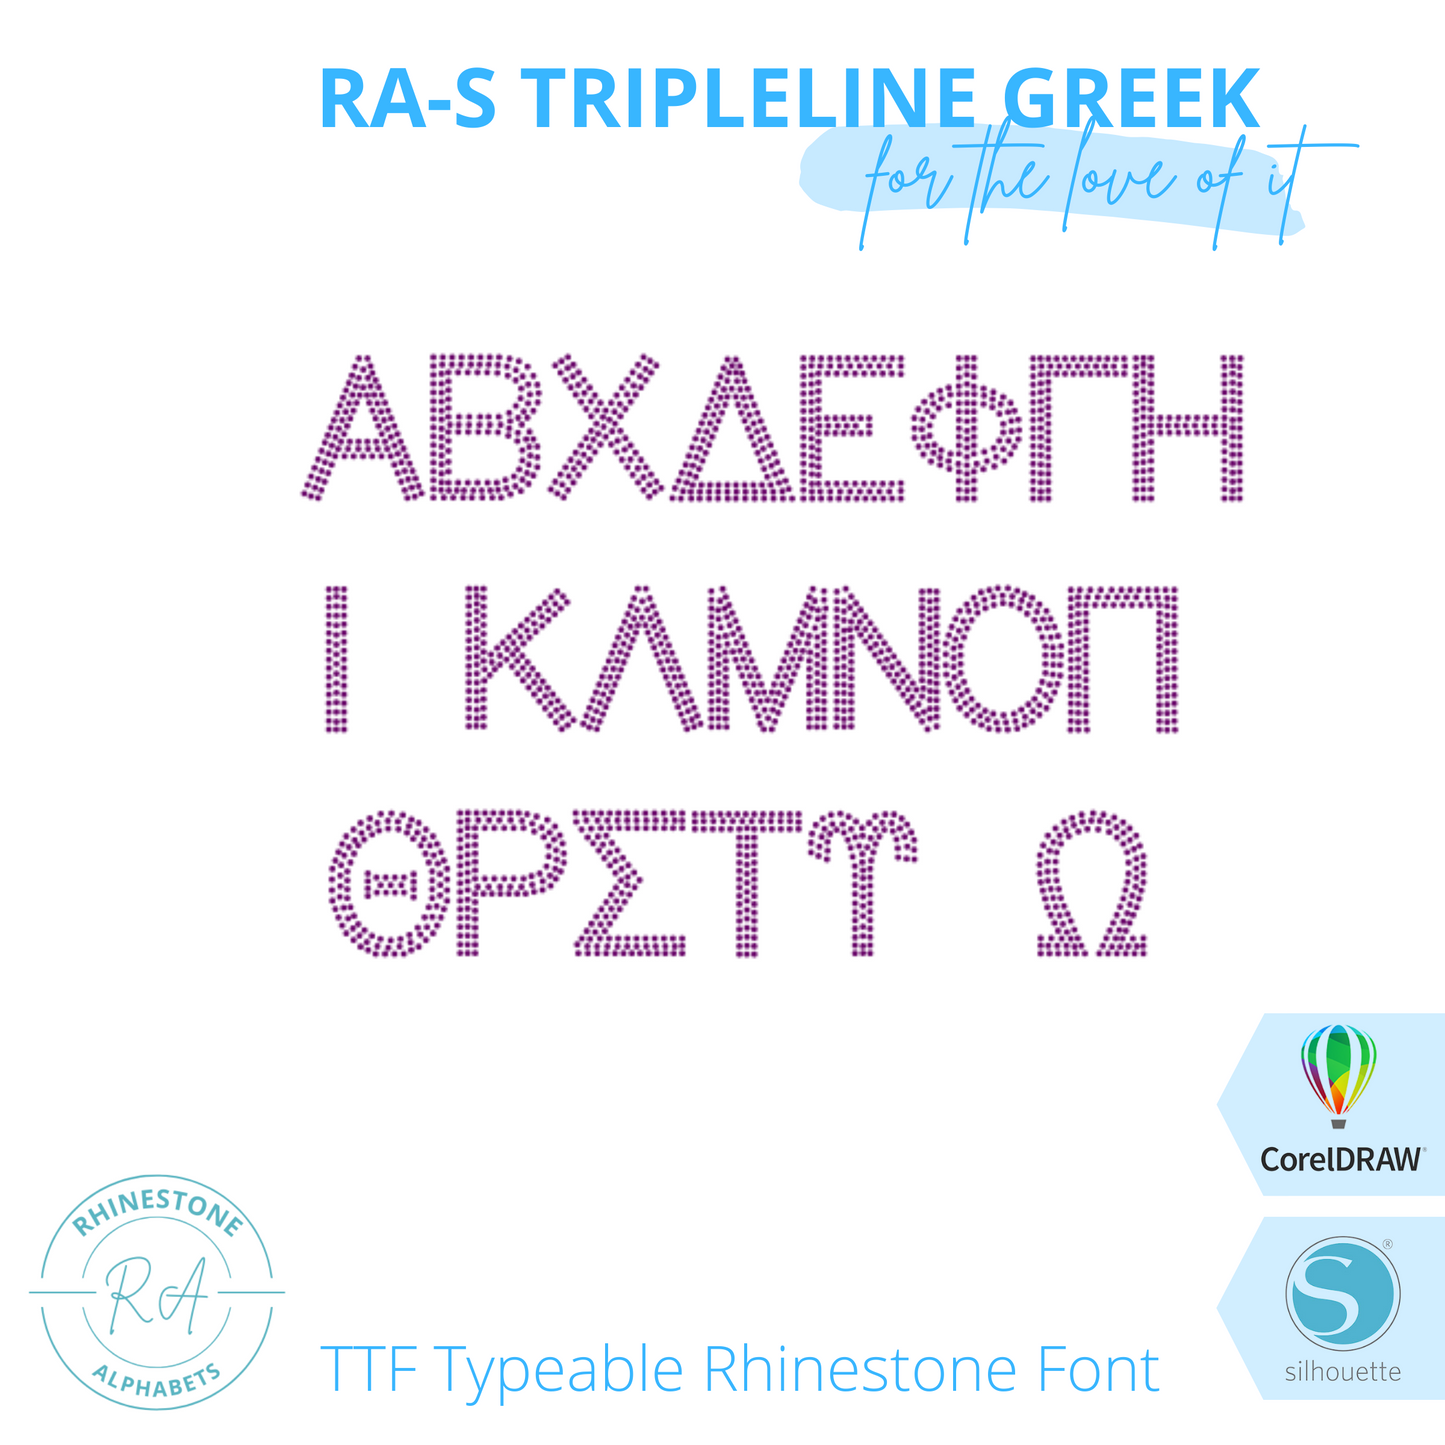 RA-S Tripleline Greek - RhinestoneAlphabets